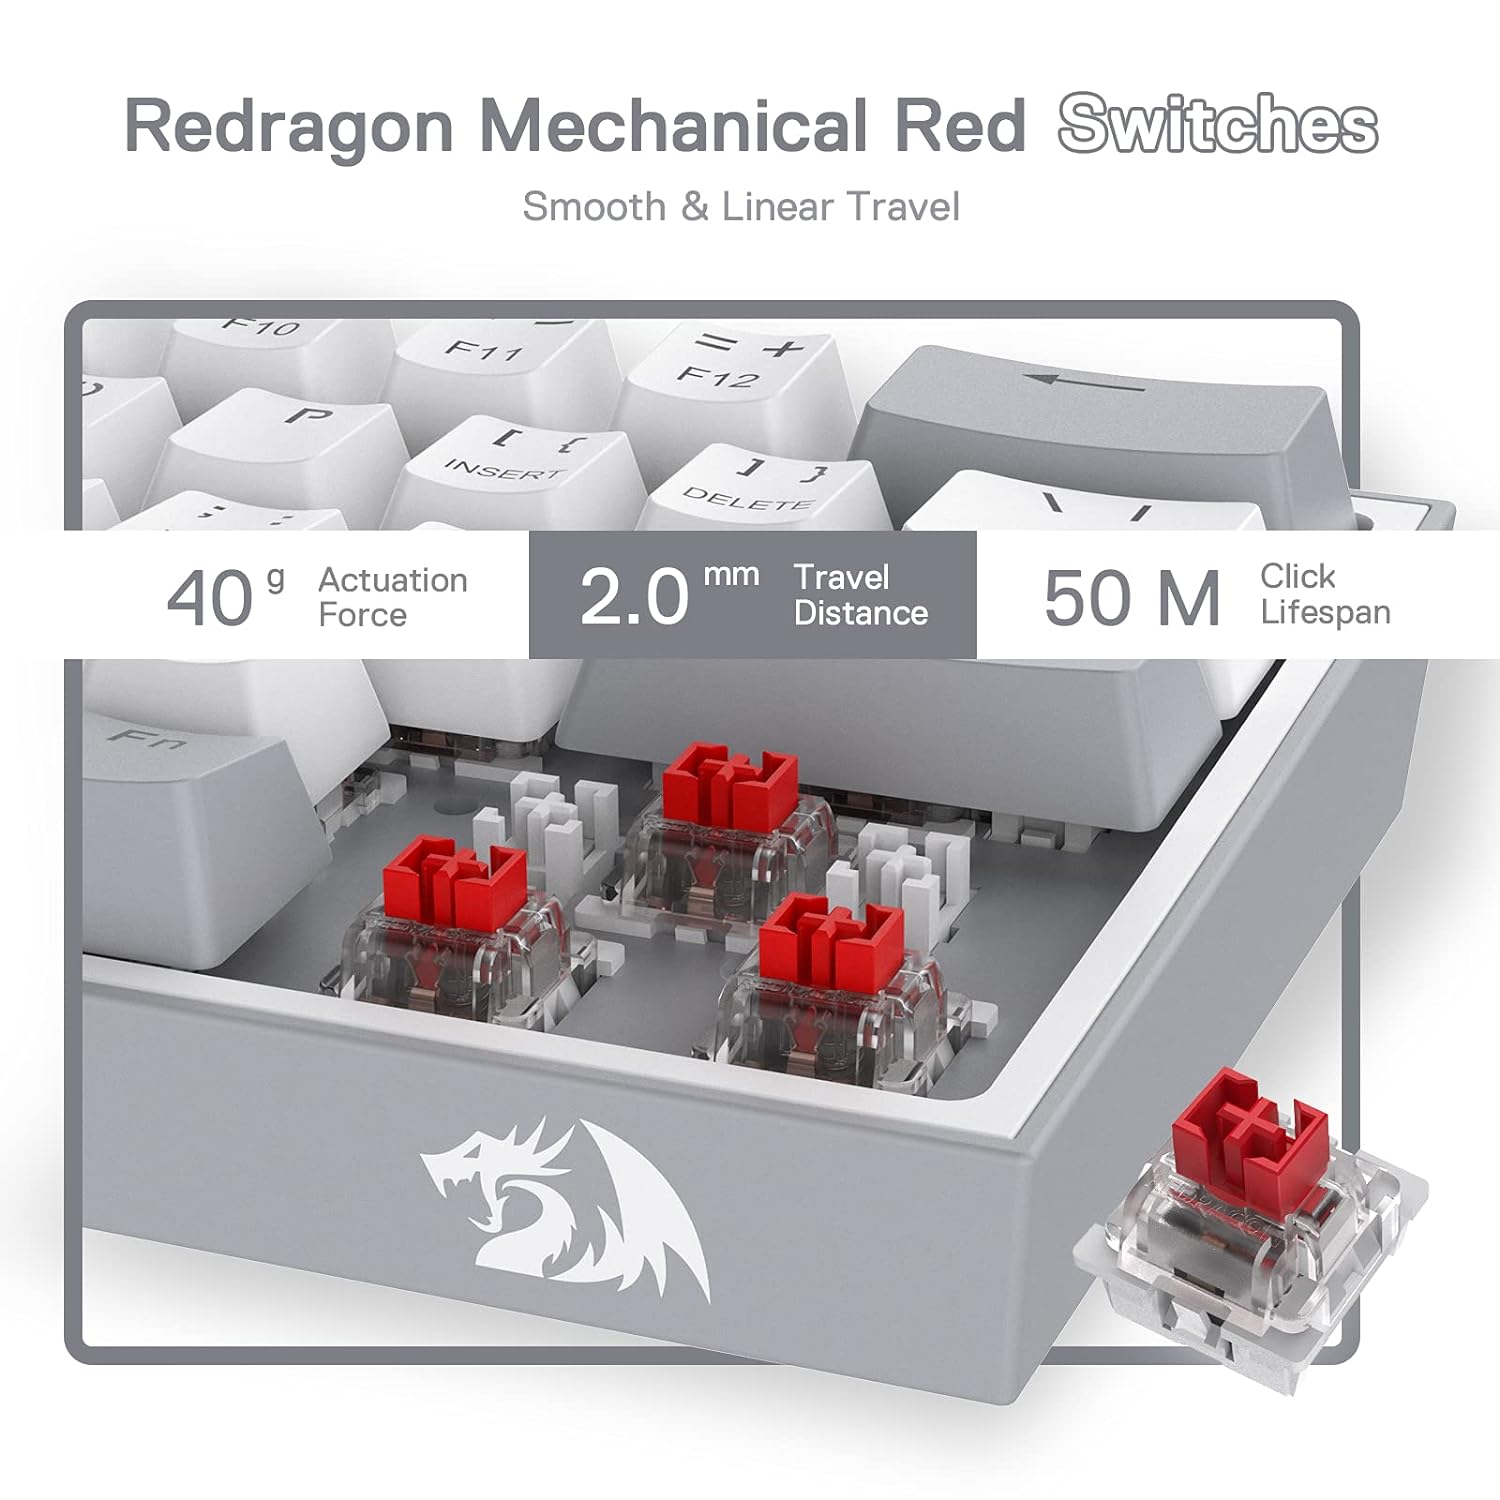 Redragon K617 Fizz 60% Wired RGB Red Switch Gaming Keyboard